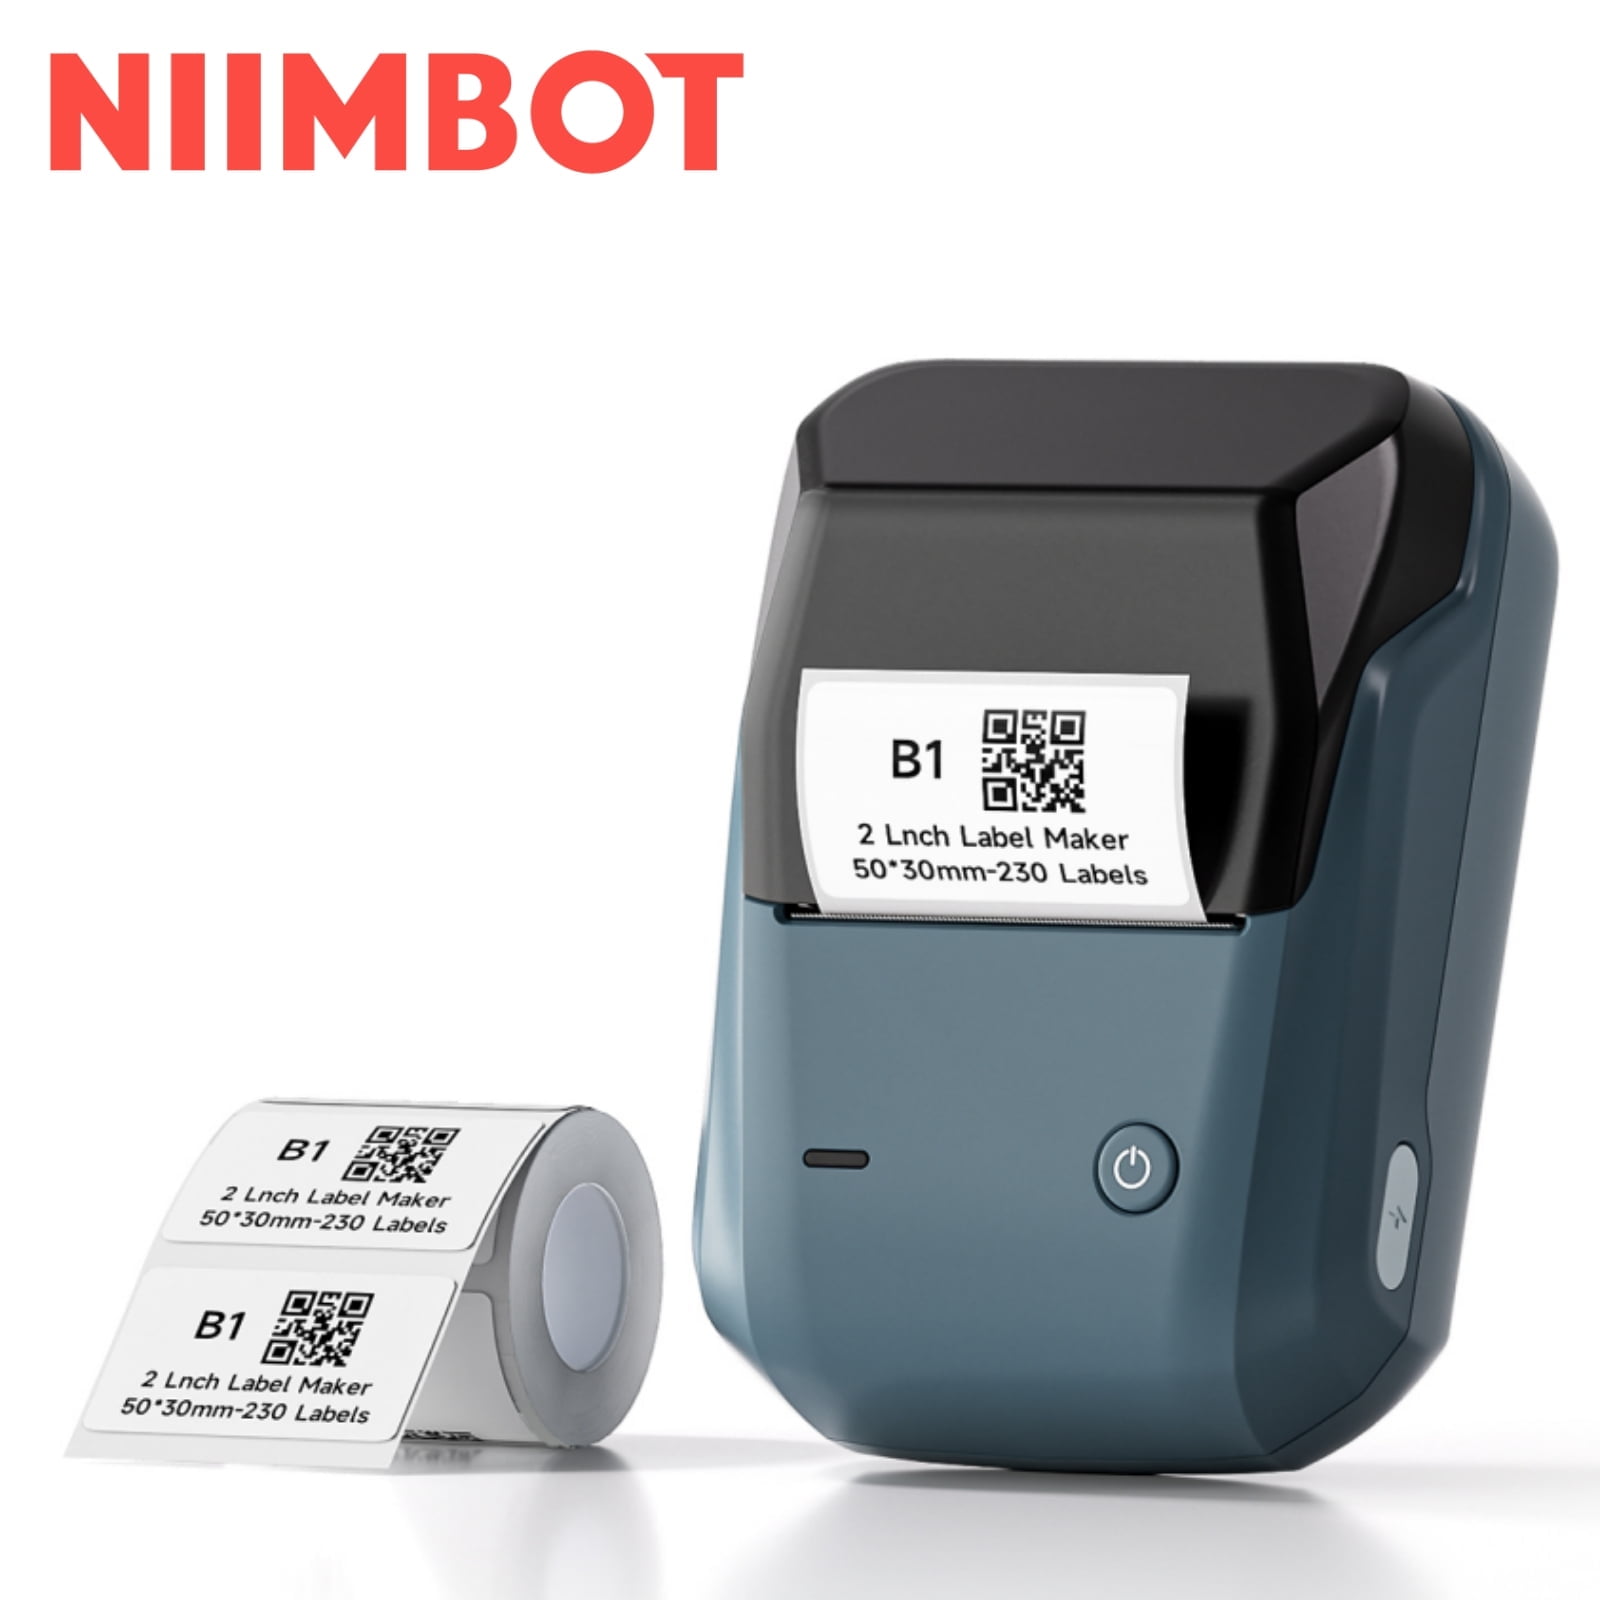 Niimbot B21 B1 Wireless Label Printer Portable Pocket Sticker